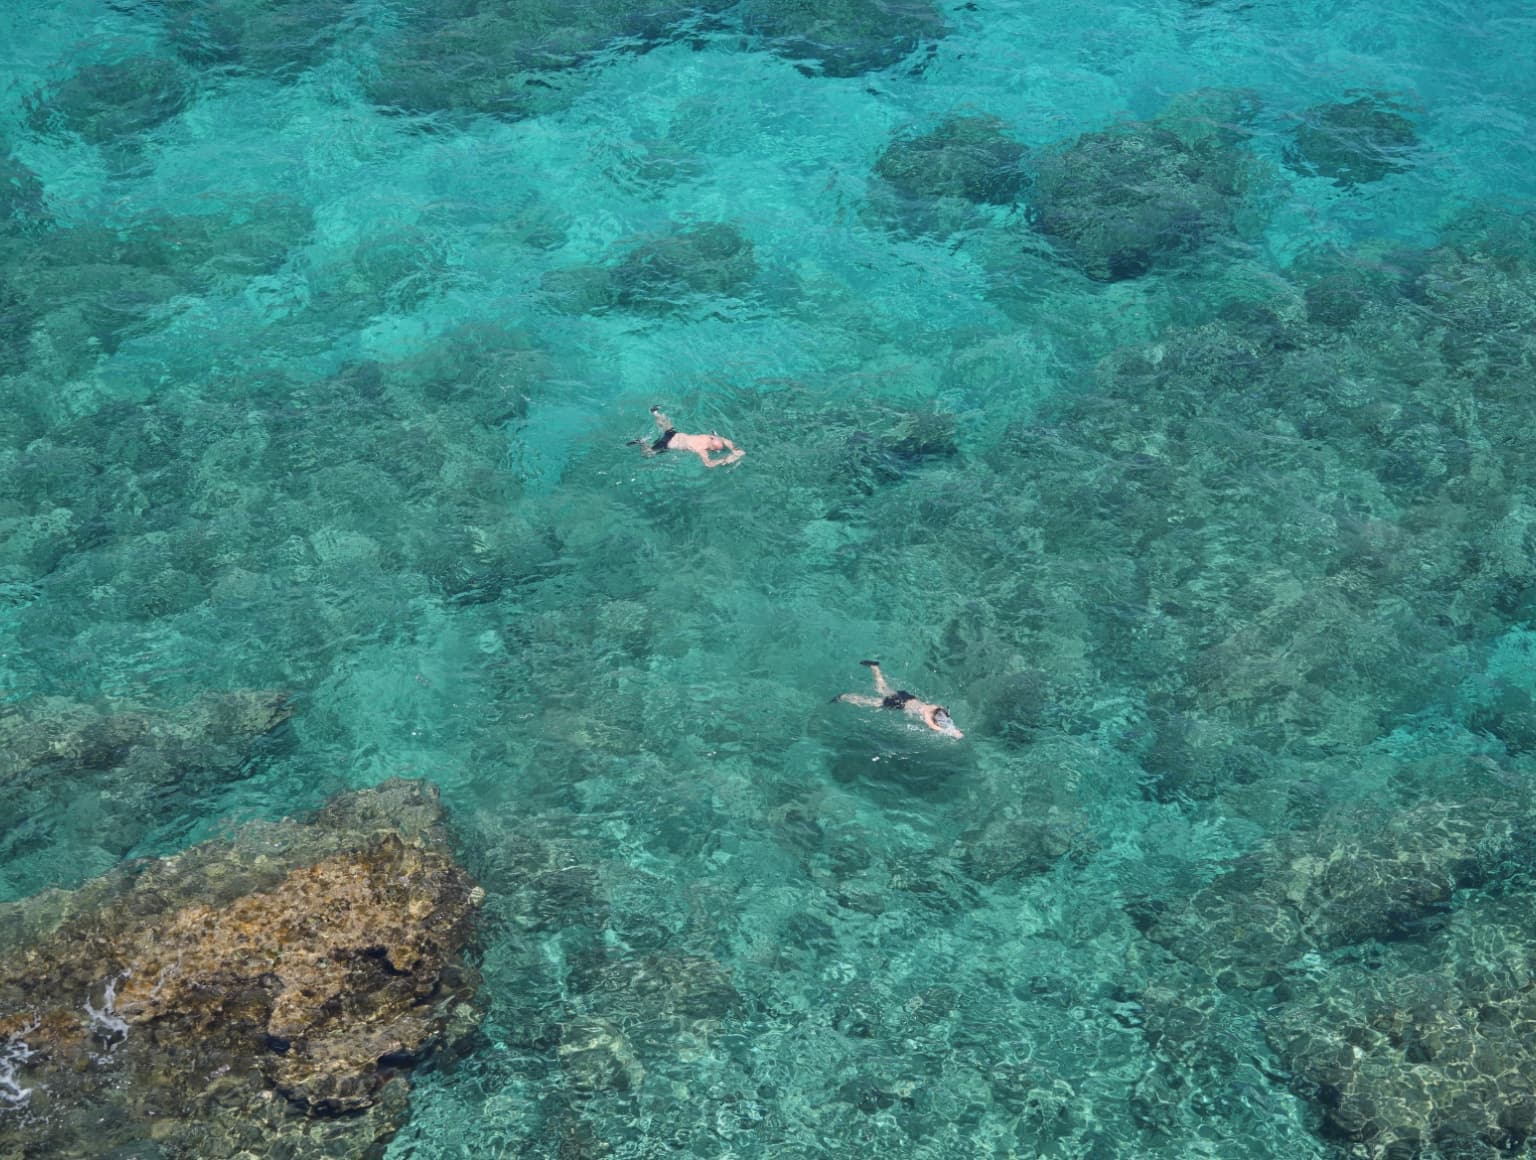 Vista de las aguas azul turquesa de Cala San Vicente